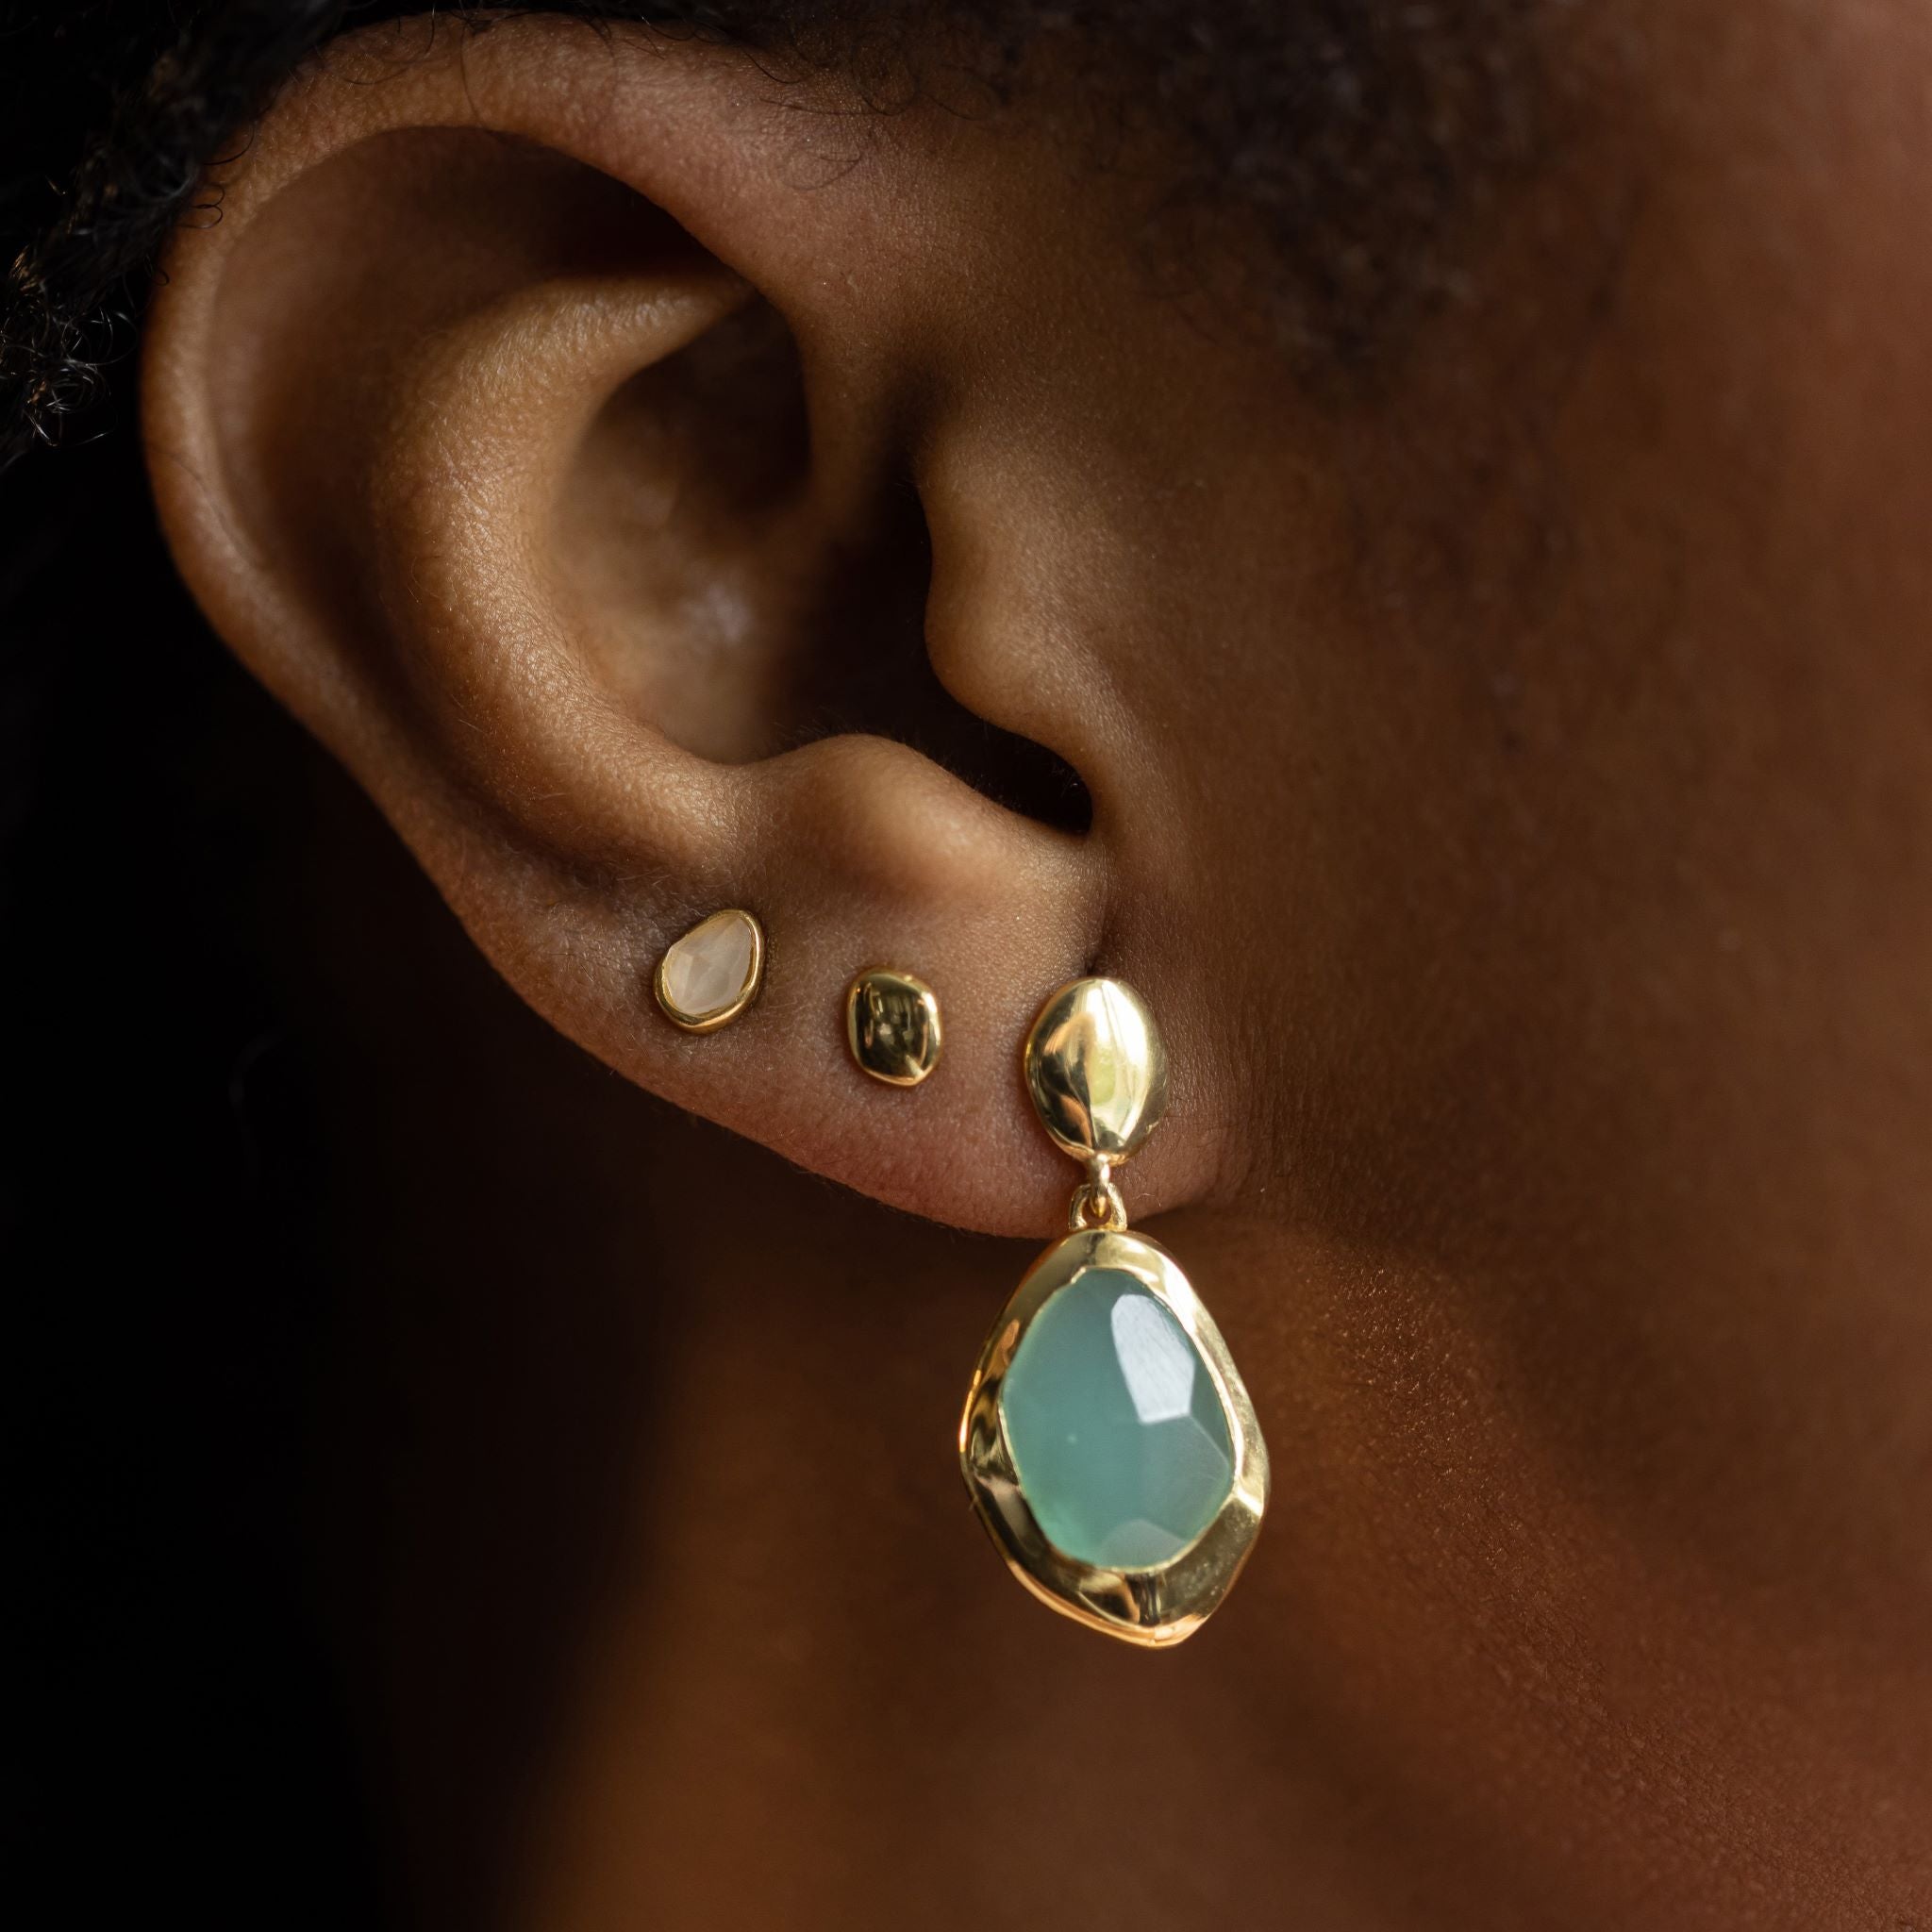 sterling silver and gold vermeil earrings in 8 stunning natural handcut gemstones, Aqua Chalcedony,Green Tourmaline,Rose Quartz,Labradorite,Garnet,Iolite,Black Onyx,Moonstone